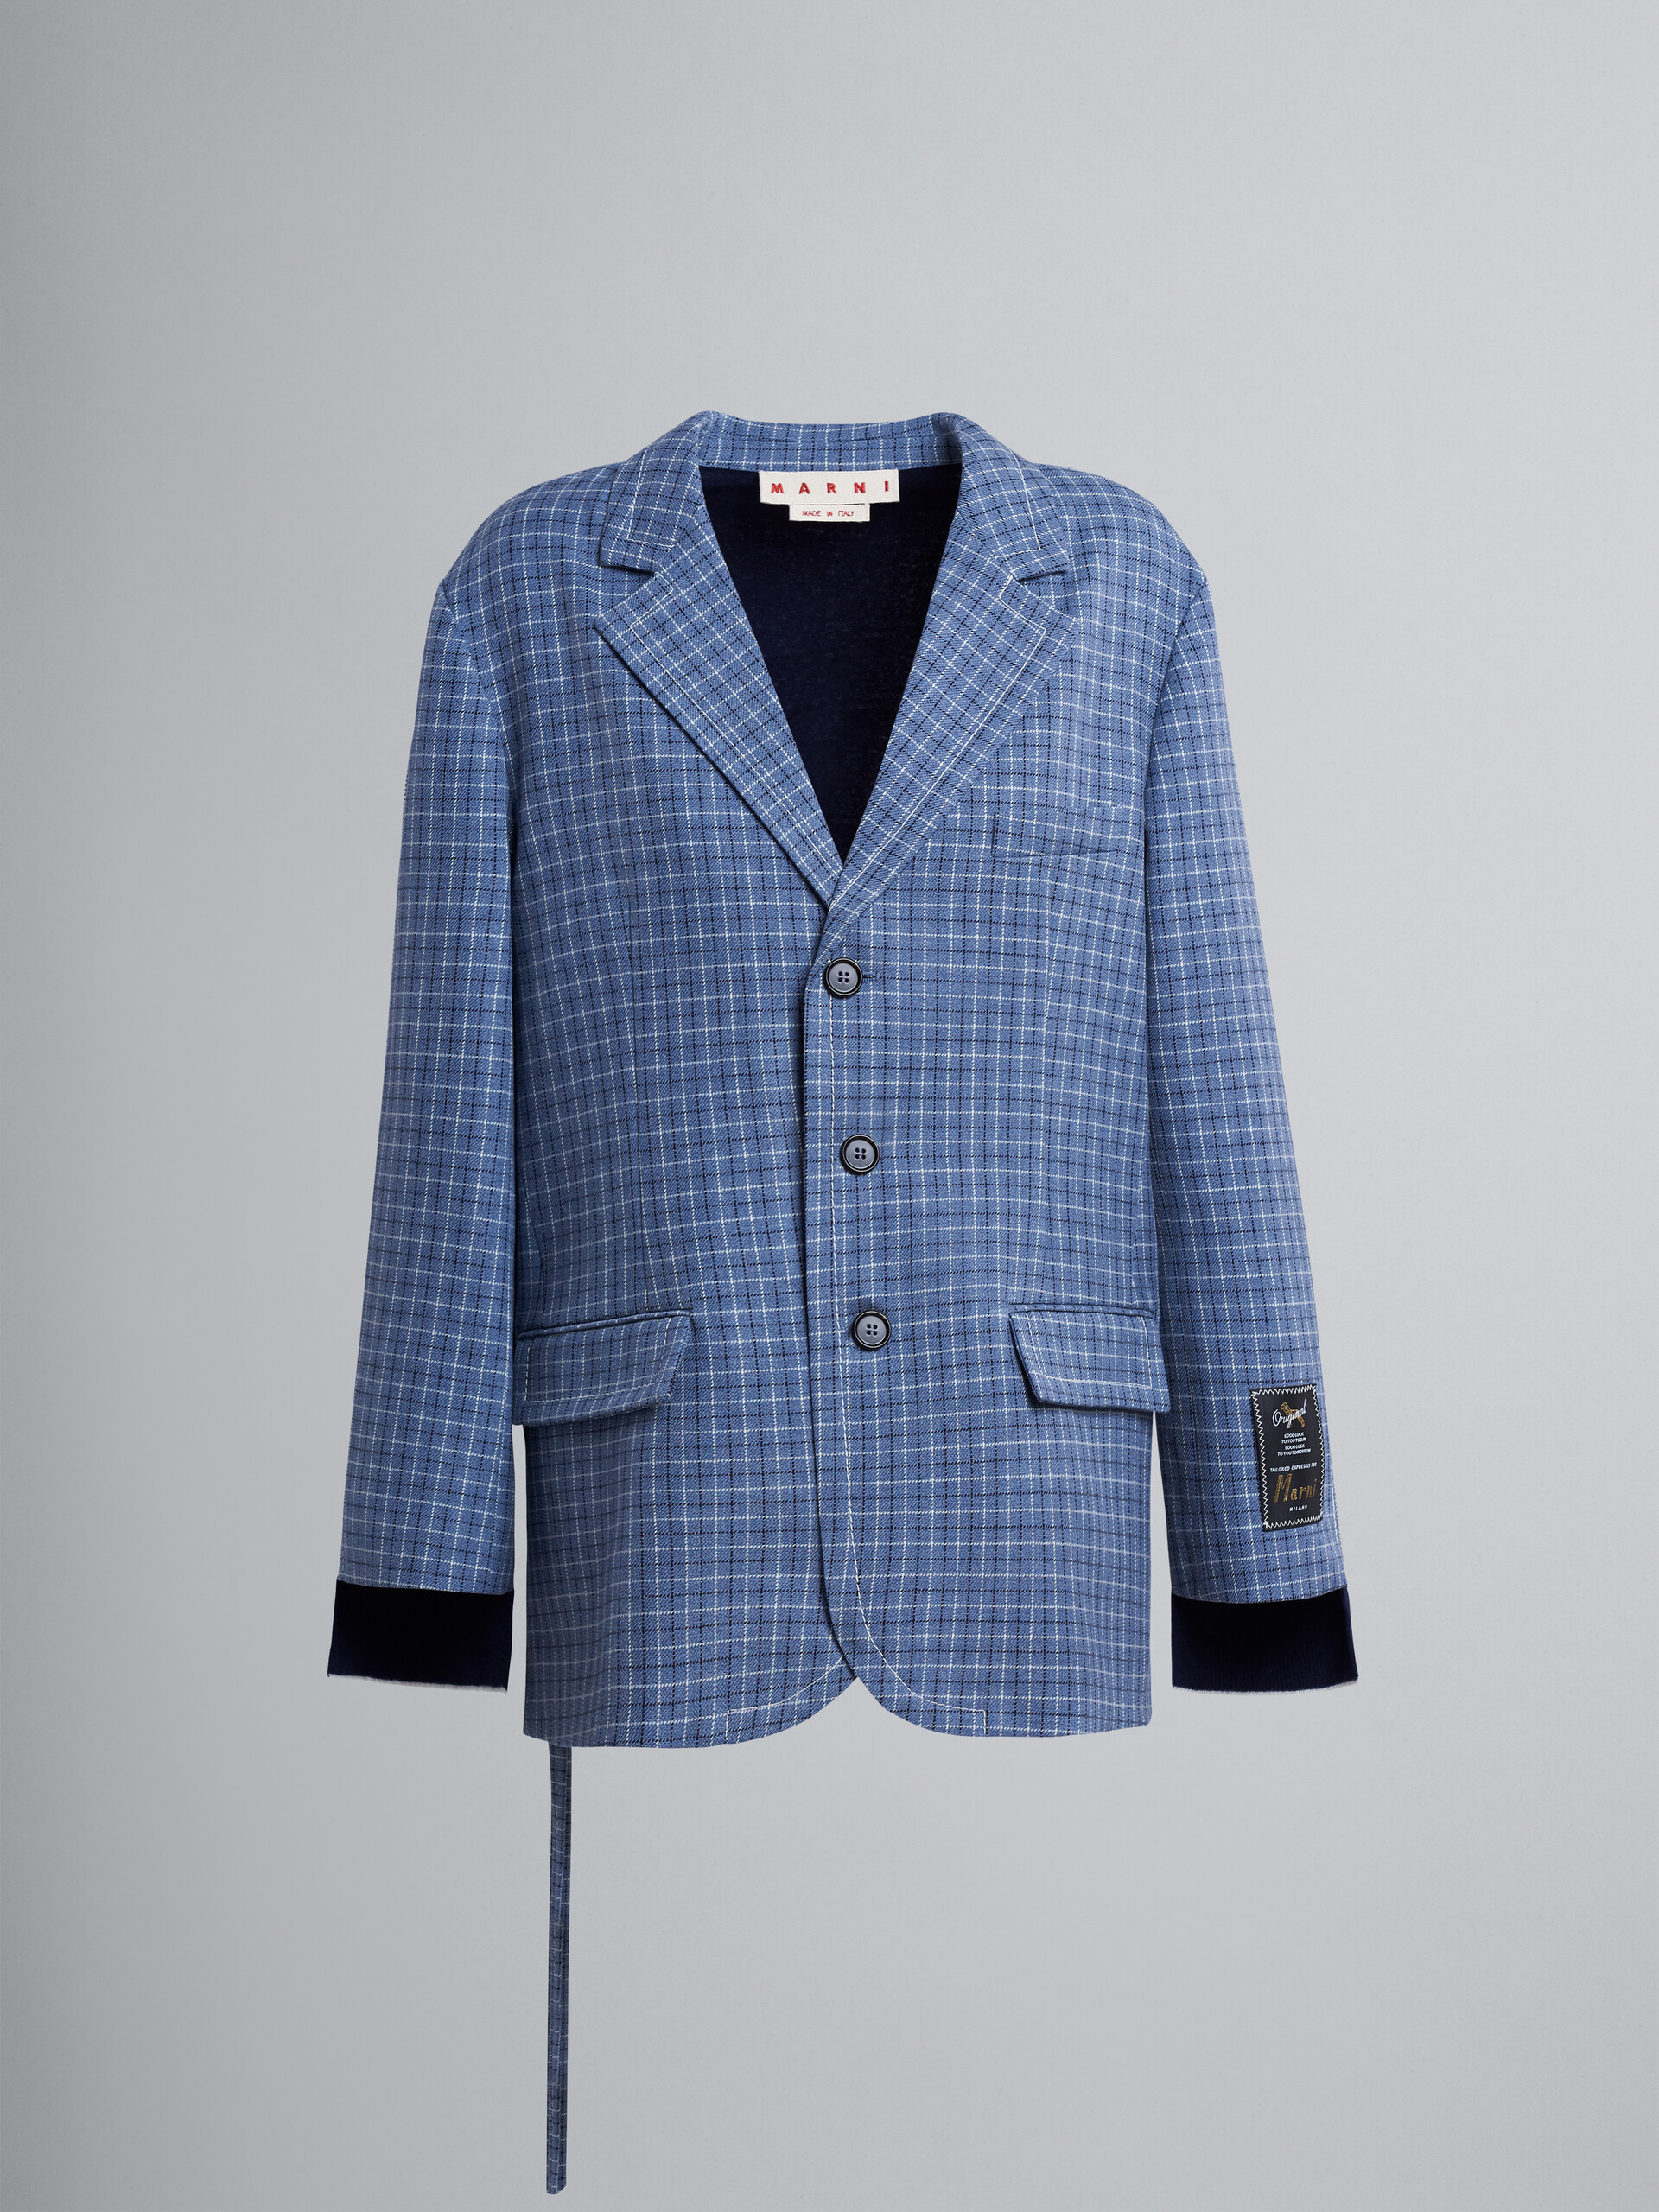 Check wool twill blazer jacket with knit inserts - Jackets - Image 1